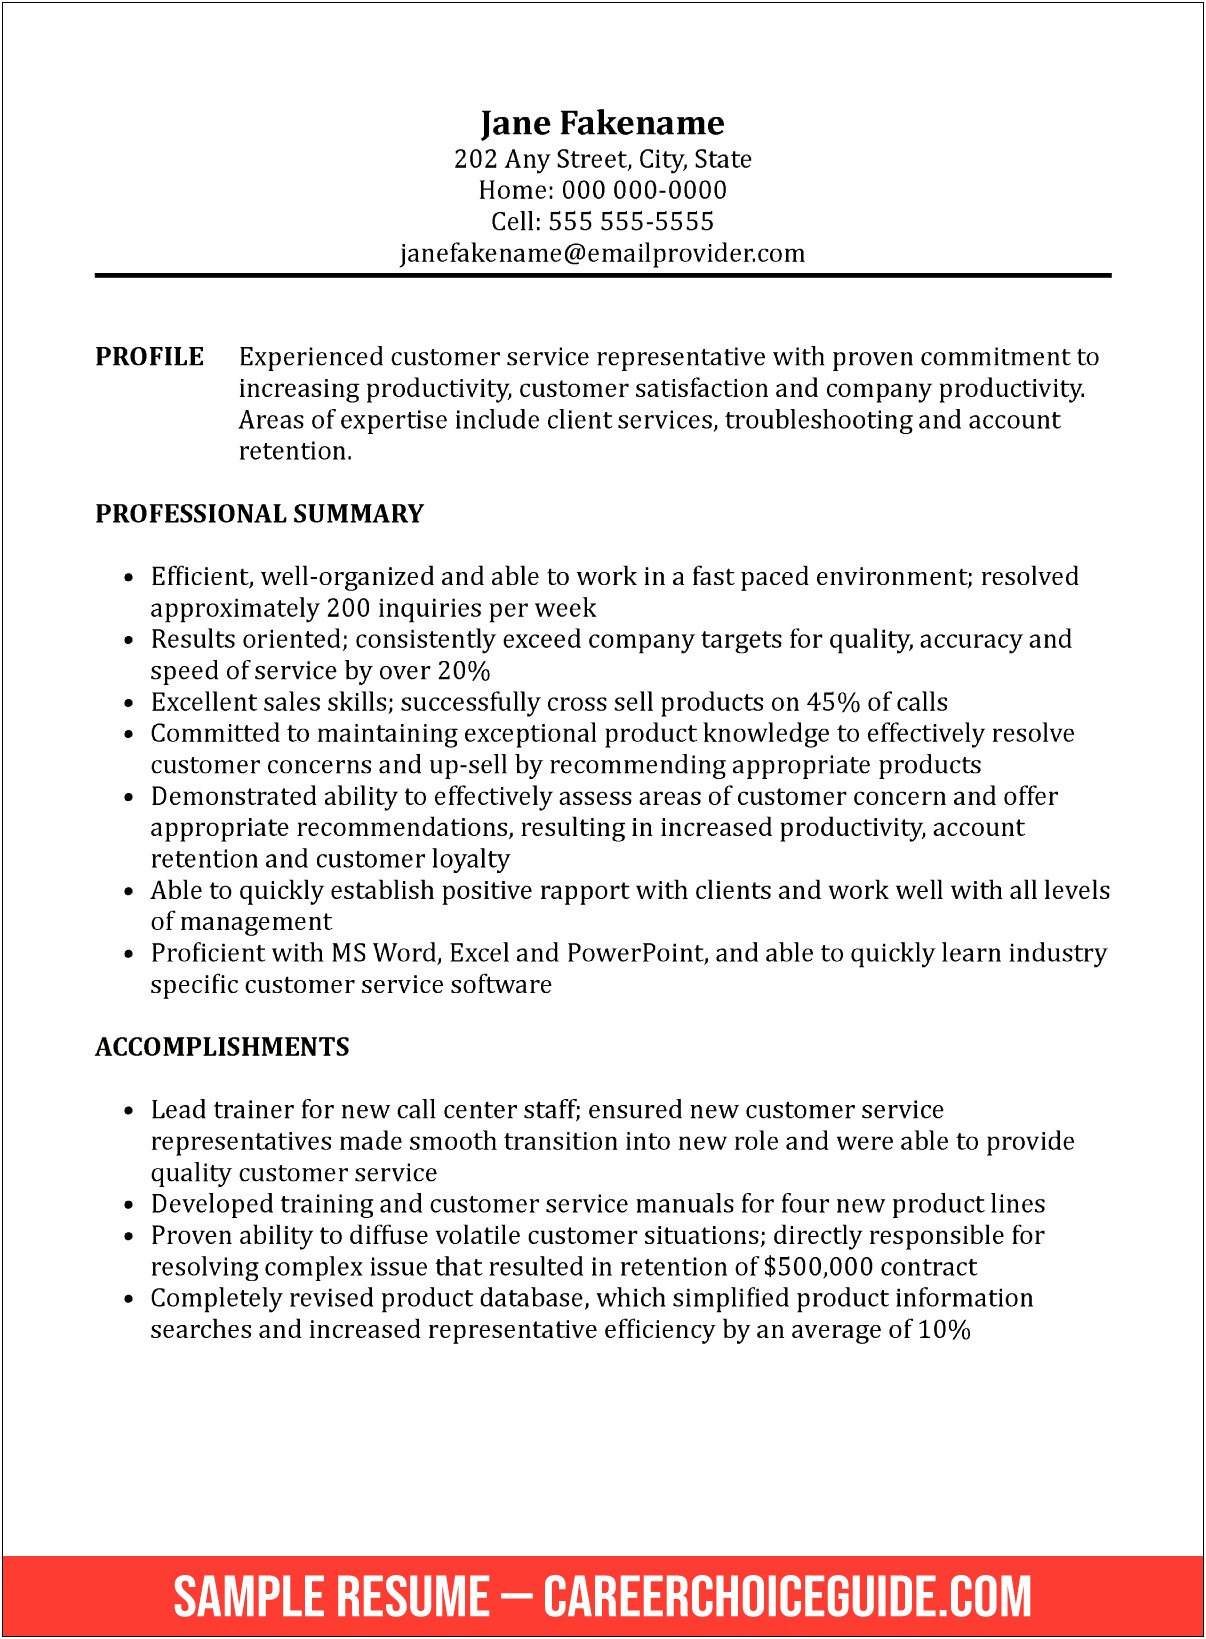 Resume Description Of Call Center Representative